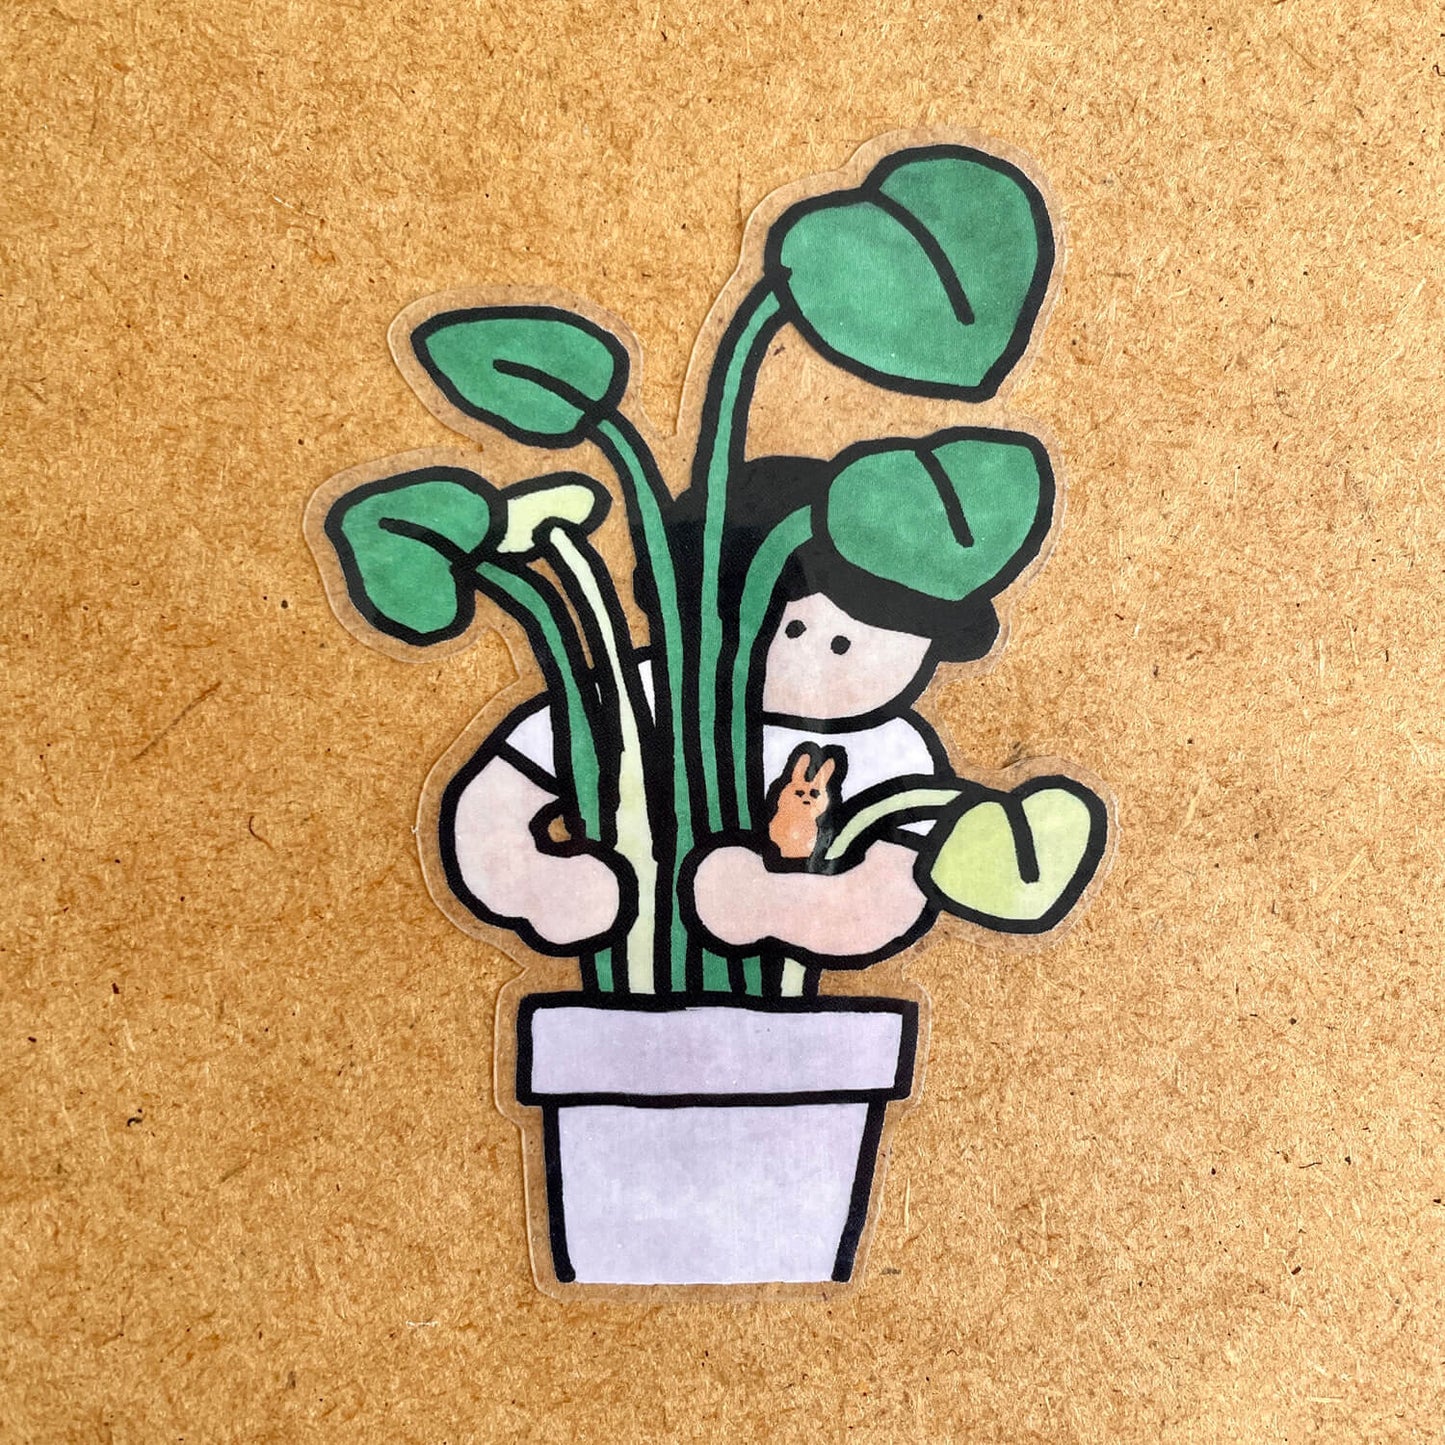 Sticker - Hug Your Plants